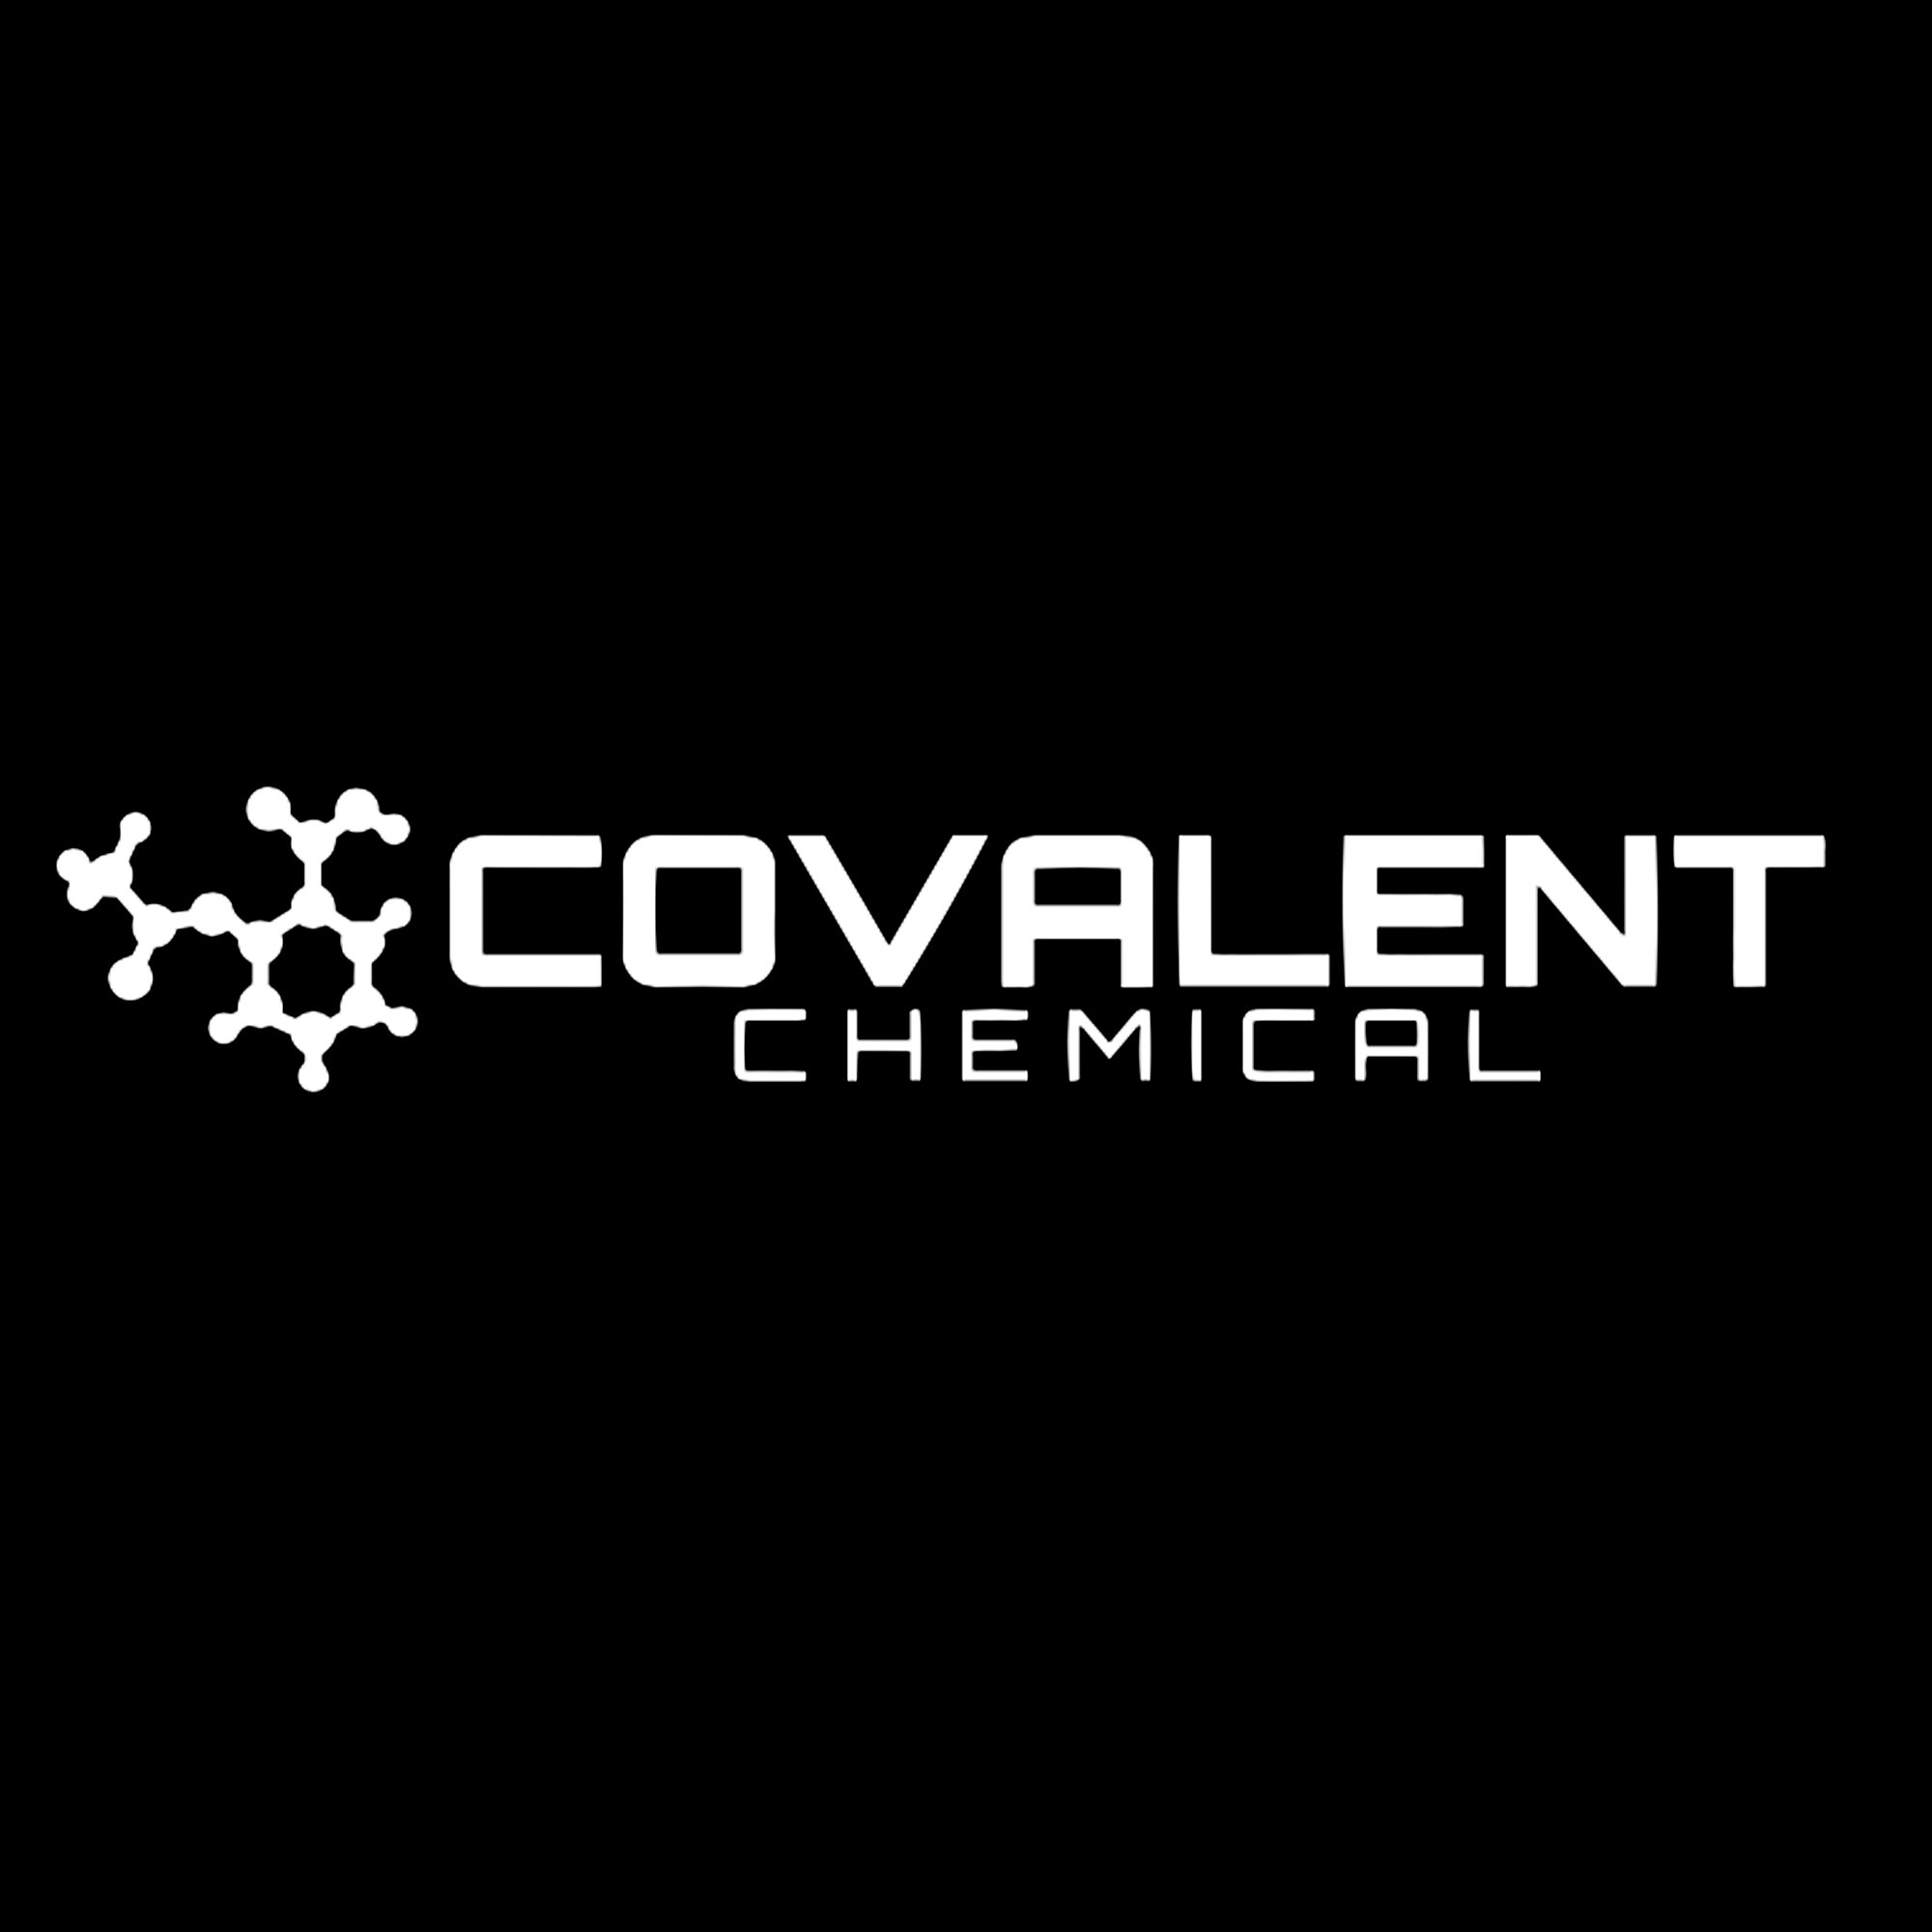 covalent chemical logo web jfm.jpg